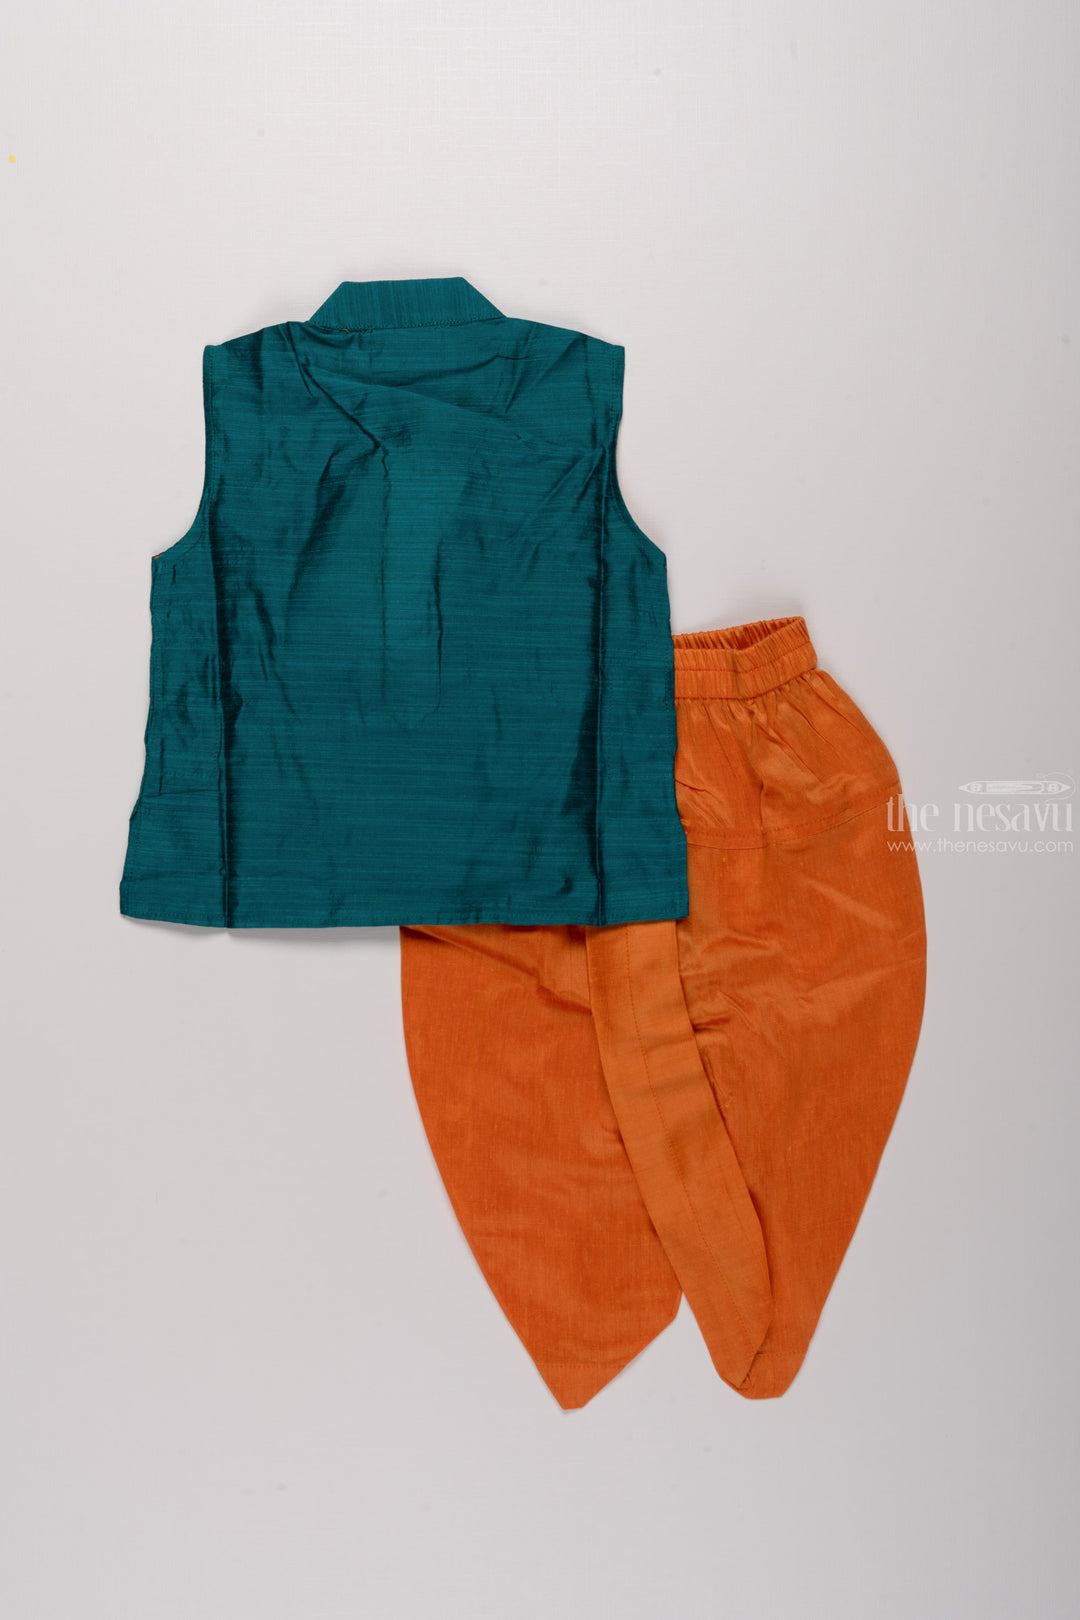 The Nesavu Boys Dothi Set Ocean Harmony: Boys' Teal Blue Kurta with Orange Dhoti Set & Embellished Detailing Nesavu Tradition Meets Trend | New Festive Collections of Boys Kurta Panchagajam Set | The Nesavu